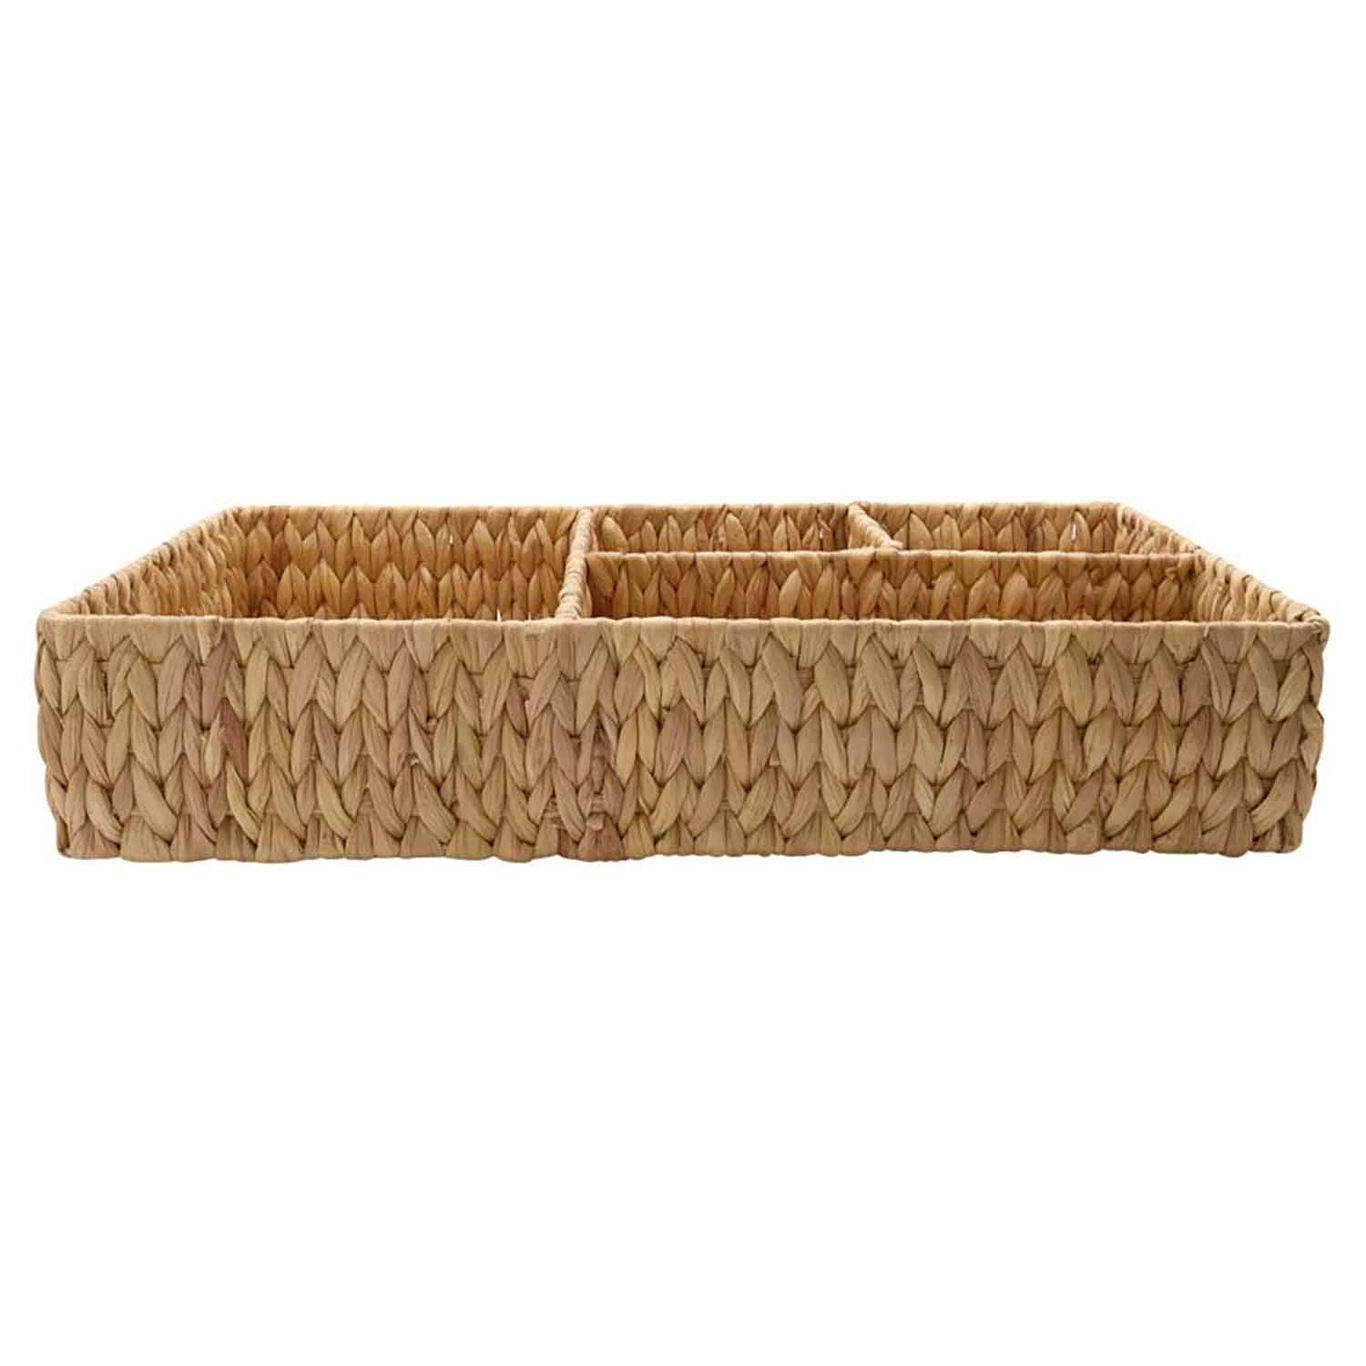 Store Basket, 30x50 cm